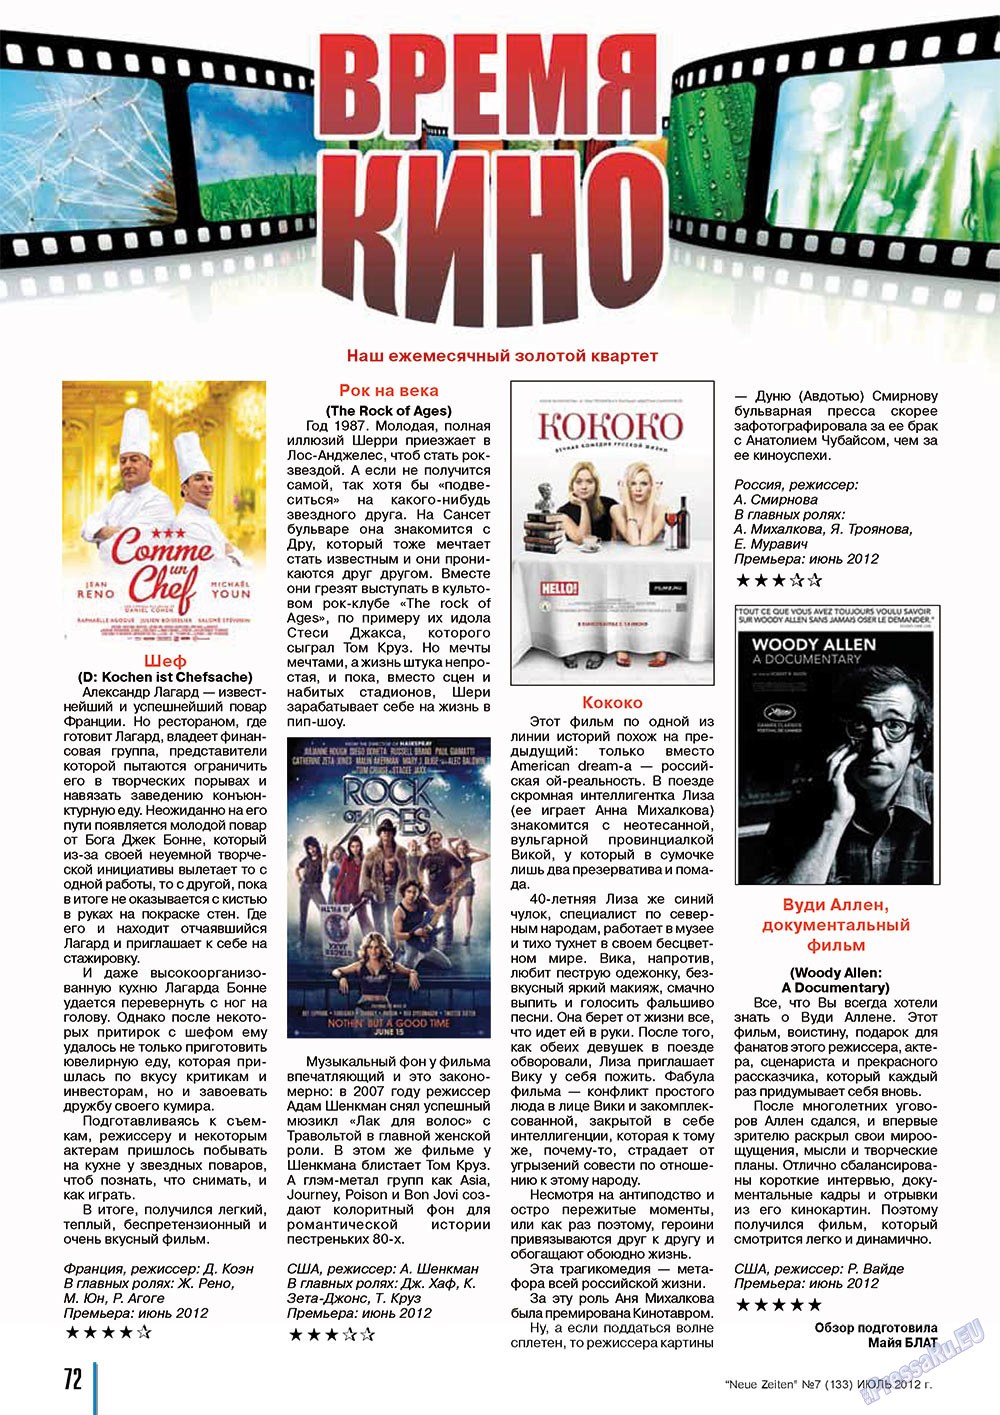 Neue Zeiten (журнал). 2012 год, номер 7, стр. 72